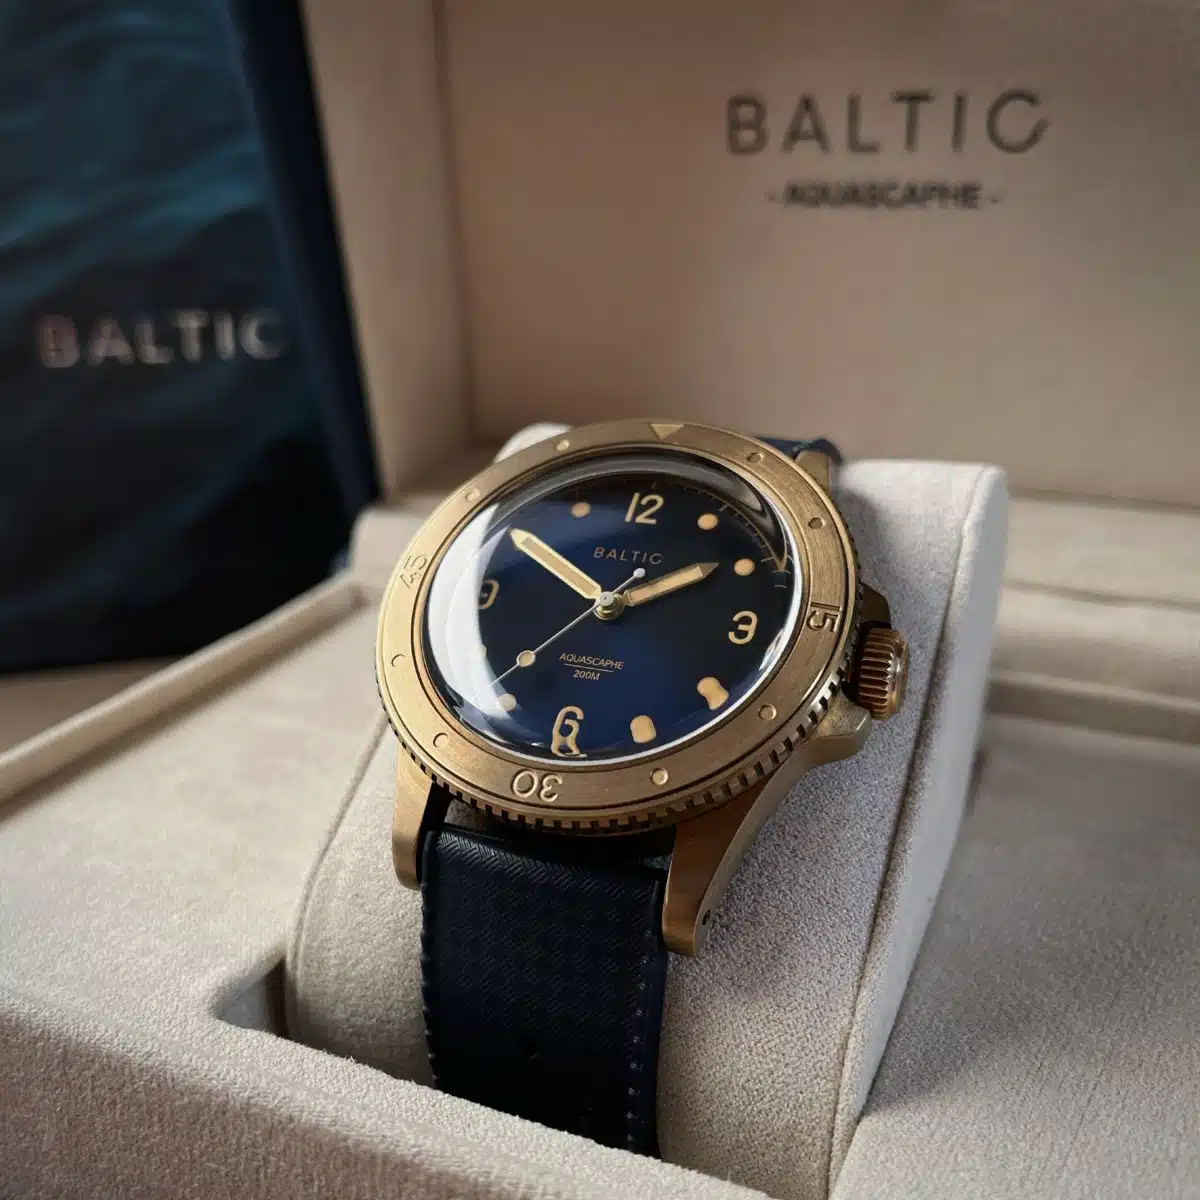 Baltic Aquascaphe in box